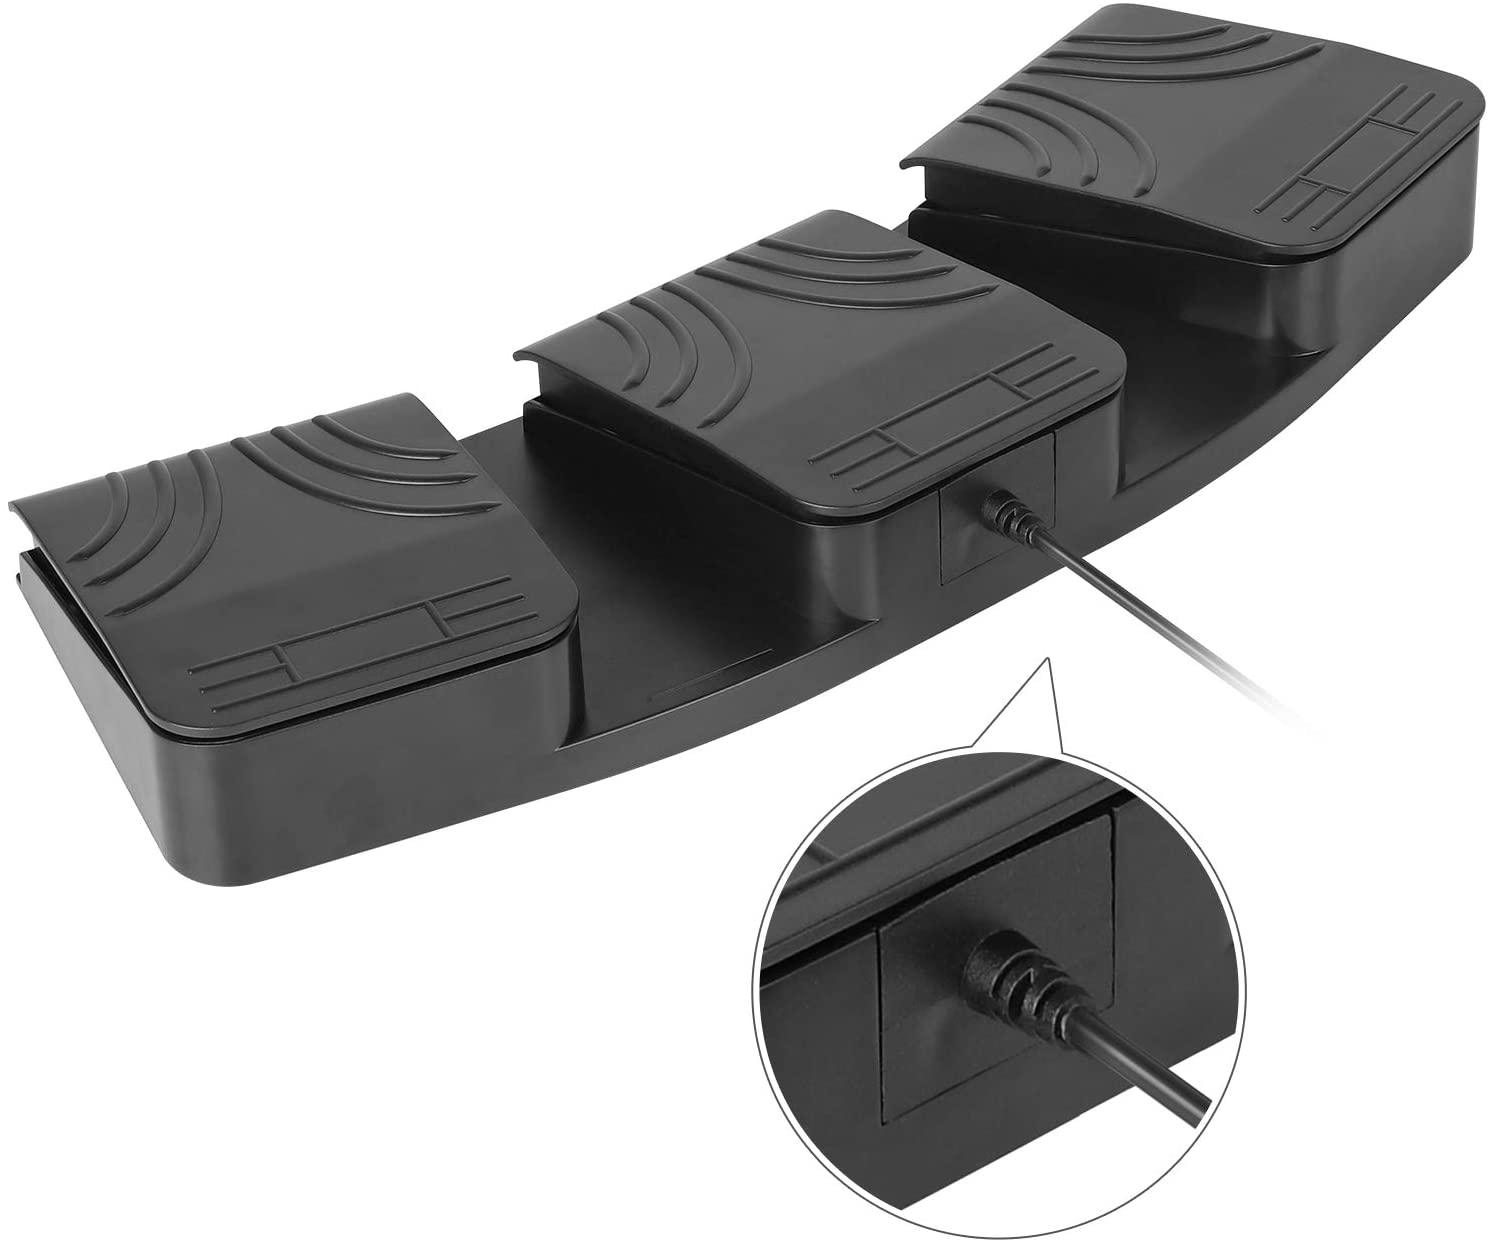 [Upgraded] iKKEGOL USB Triple Foot Pedal Optical Switch